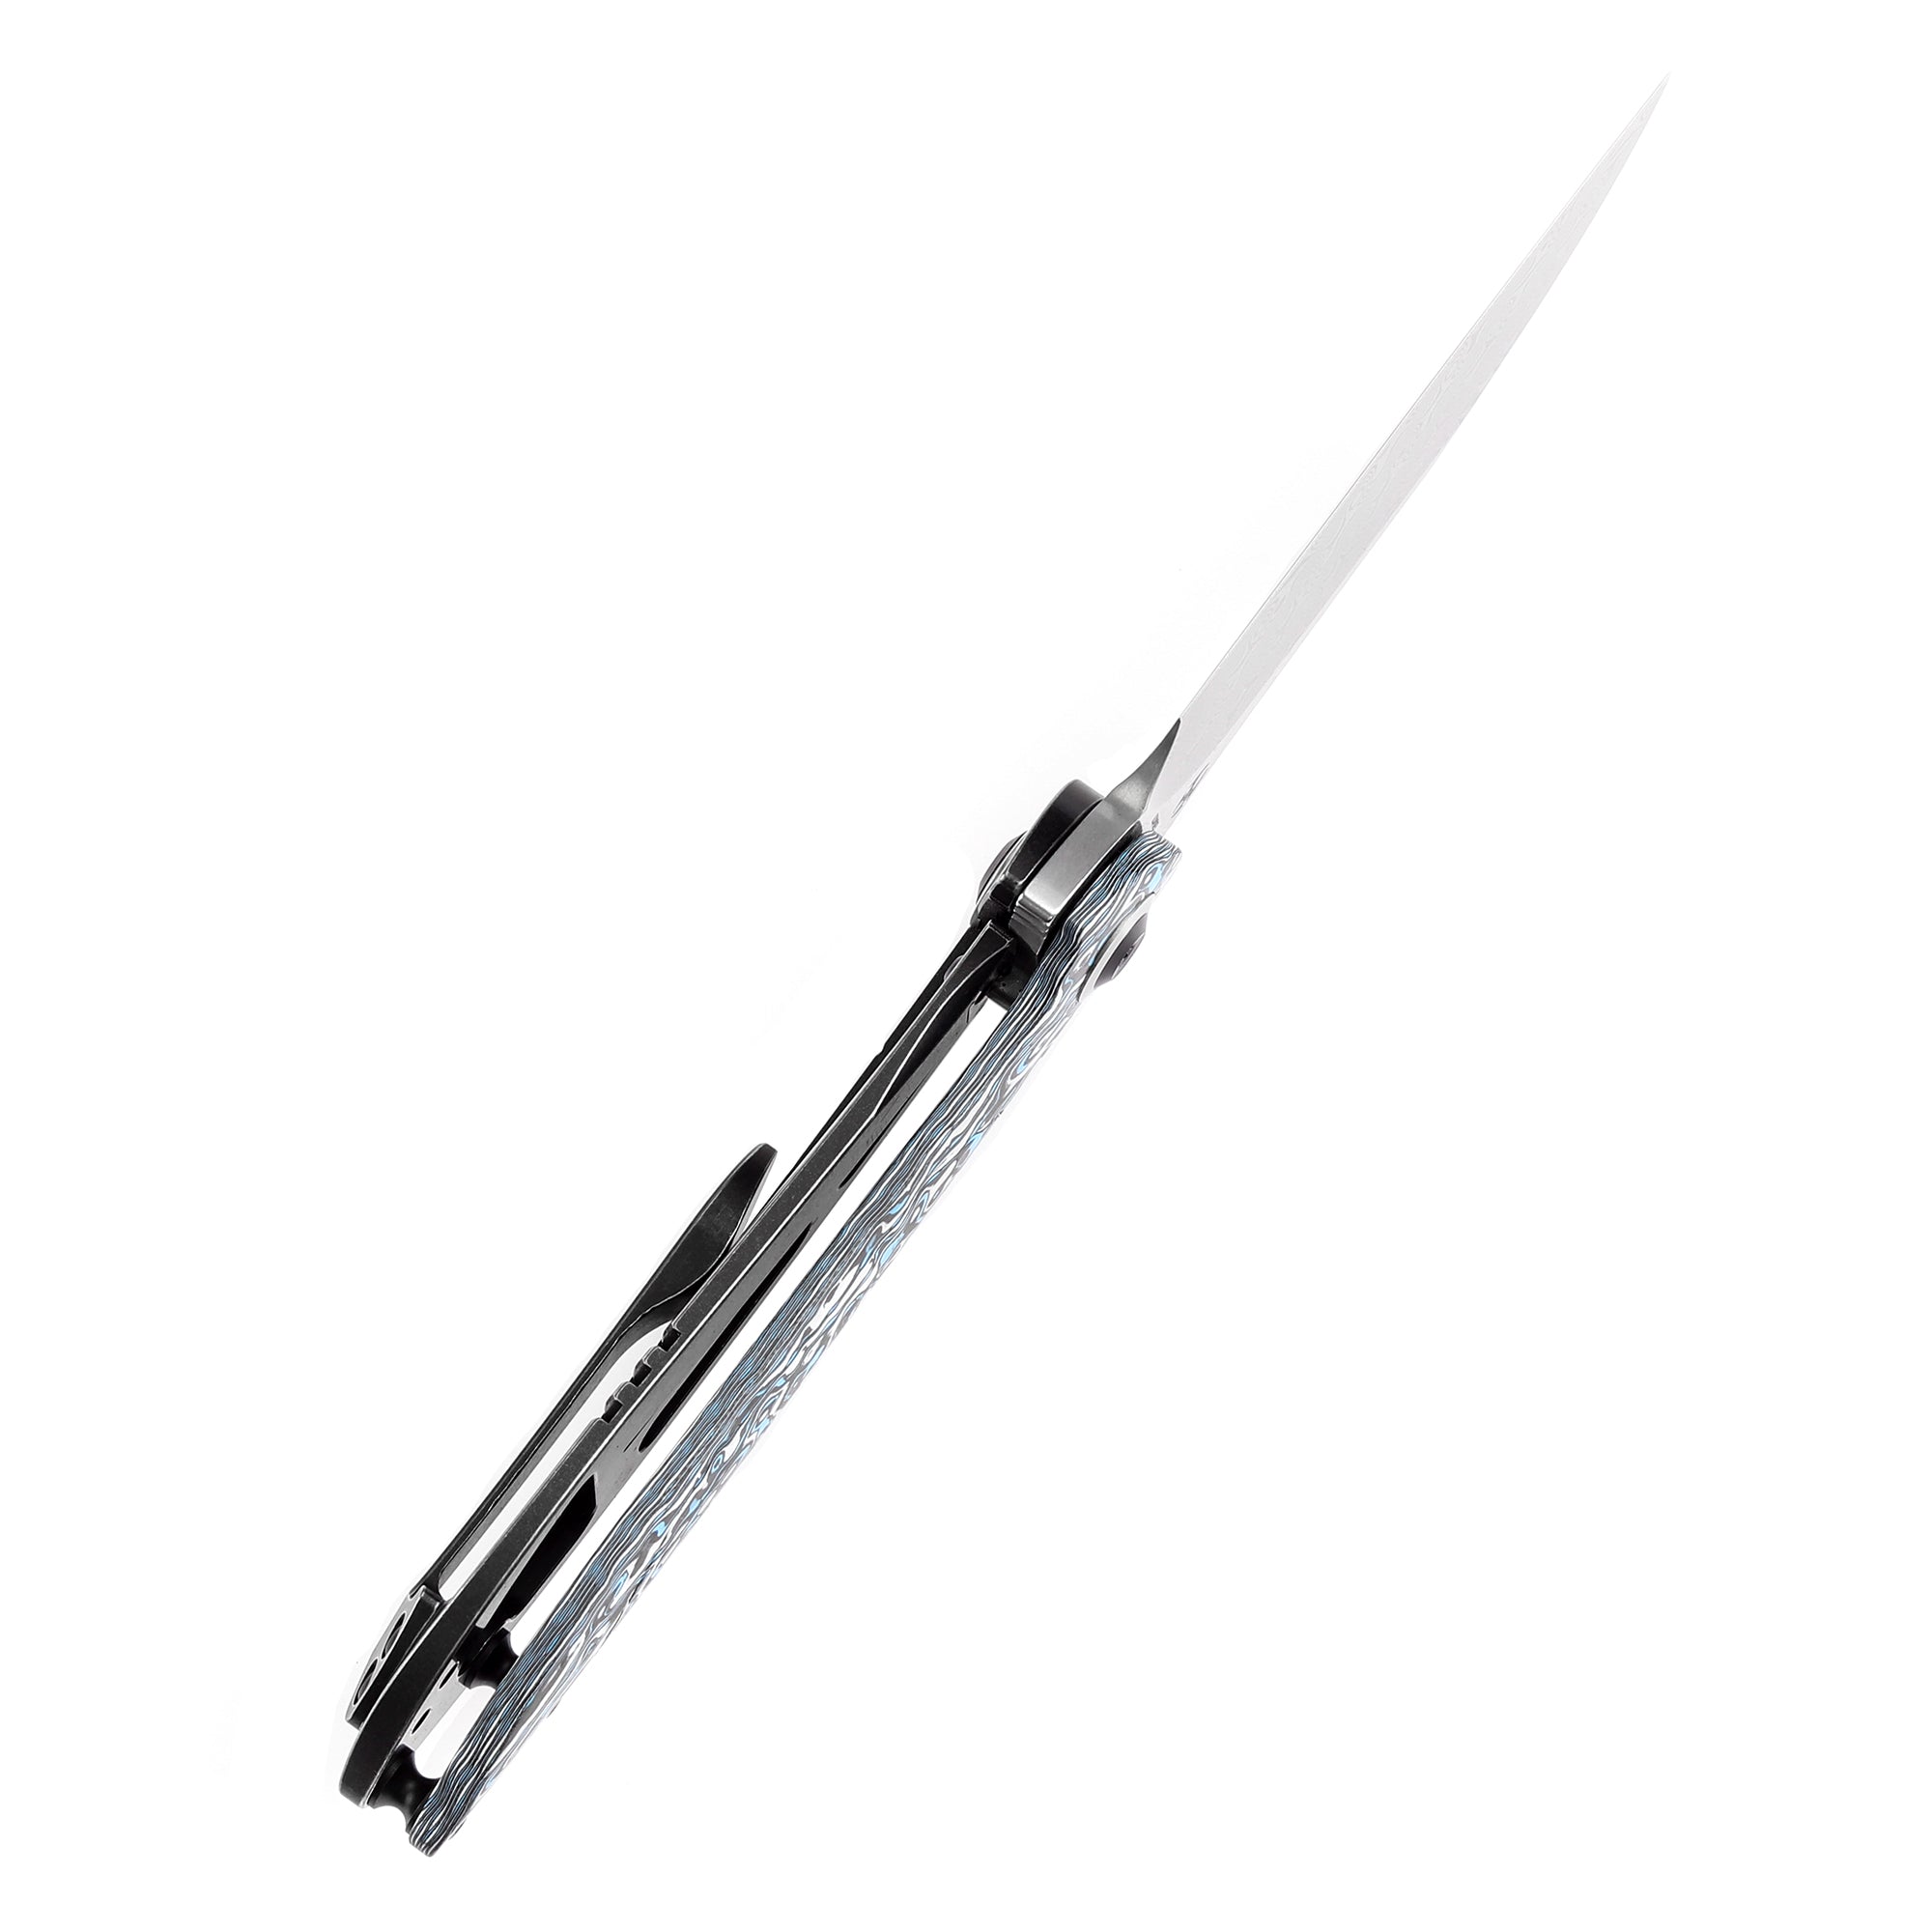 Kansept Prometheus K1040A3 CPM-S35VN Blade Carbon Fiber Titanium Handle Folding Knife